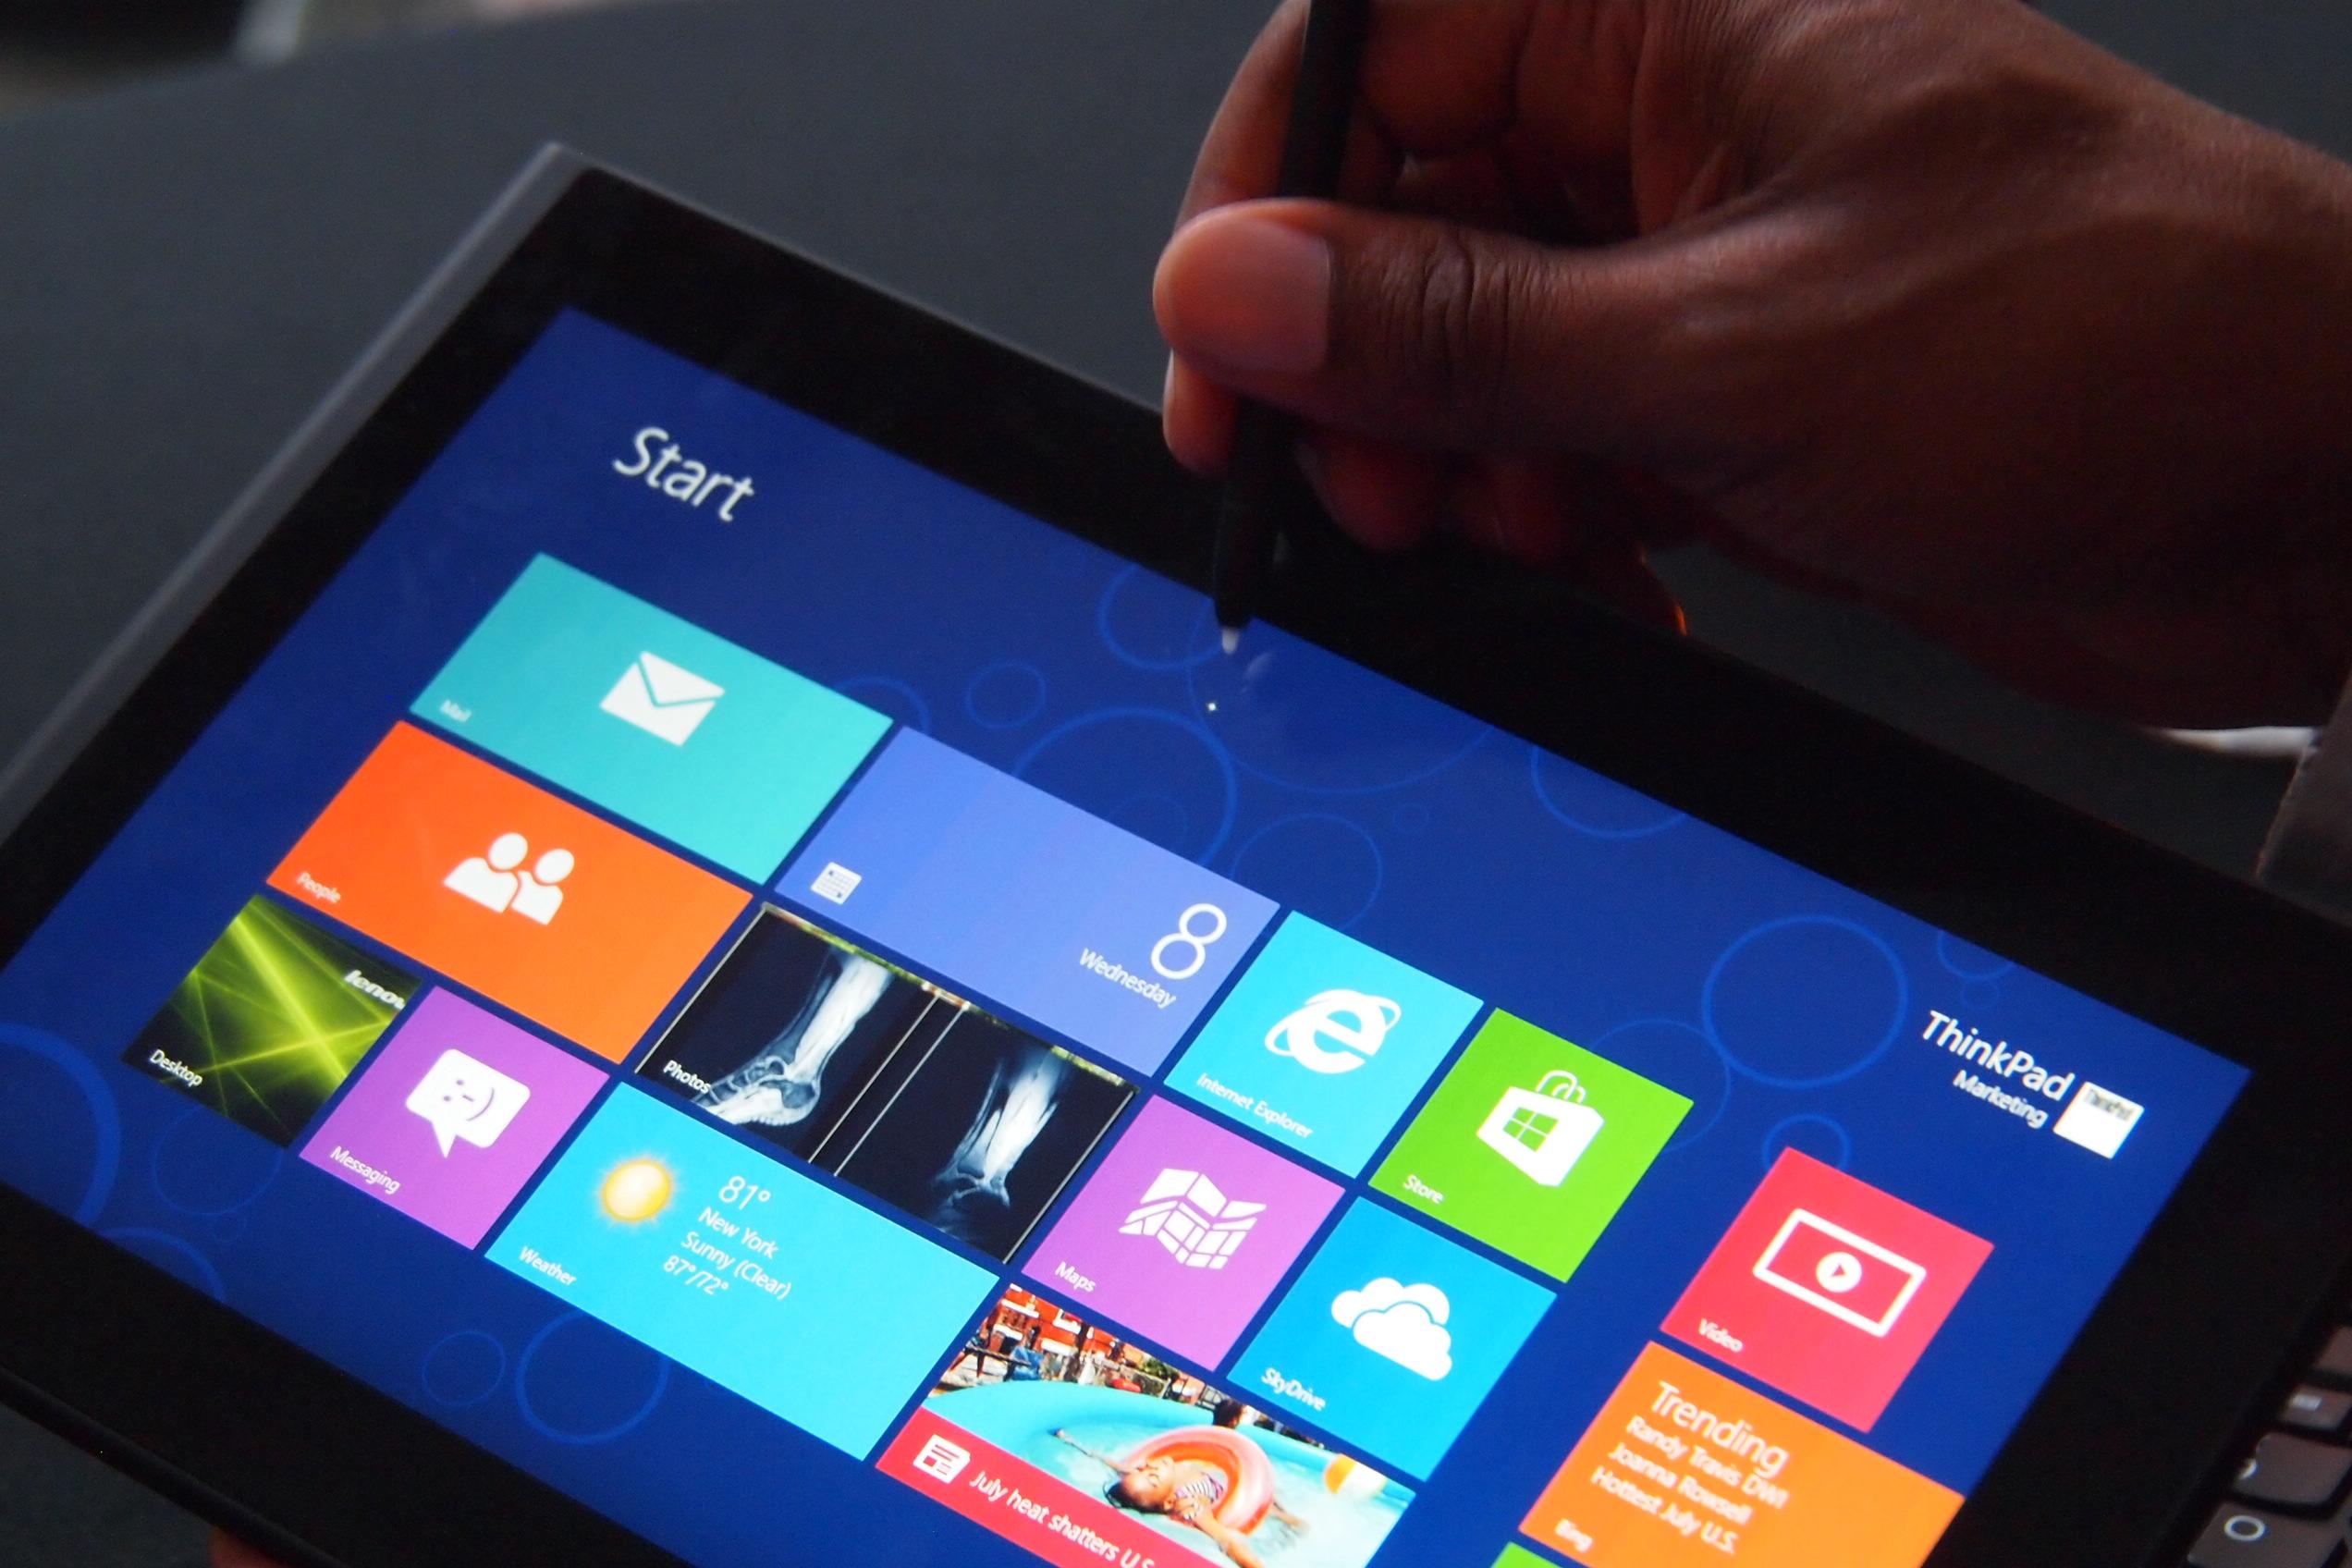 Lenovo Windows 8 Tablet Review